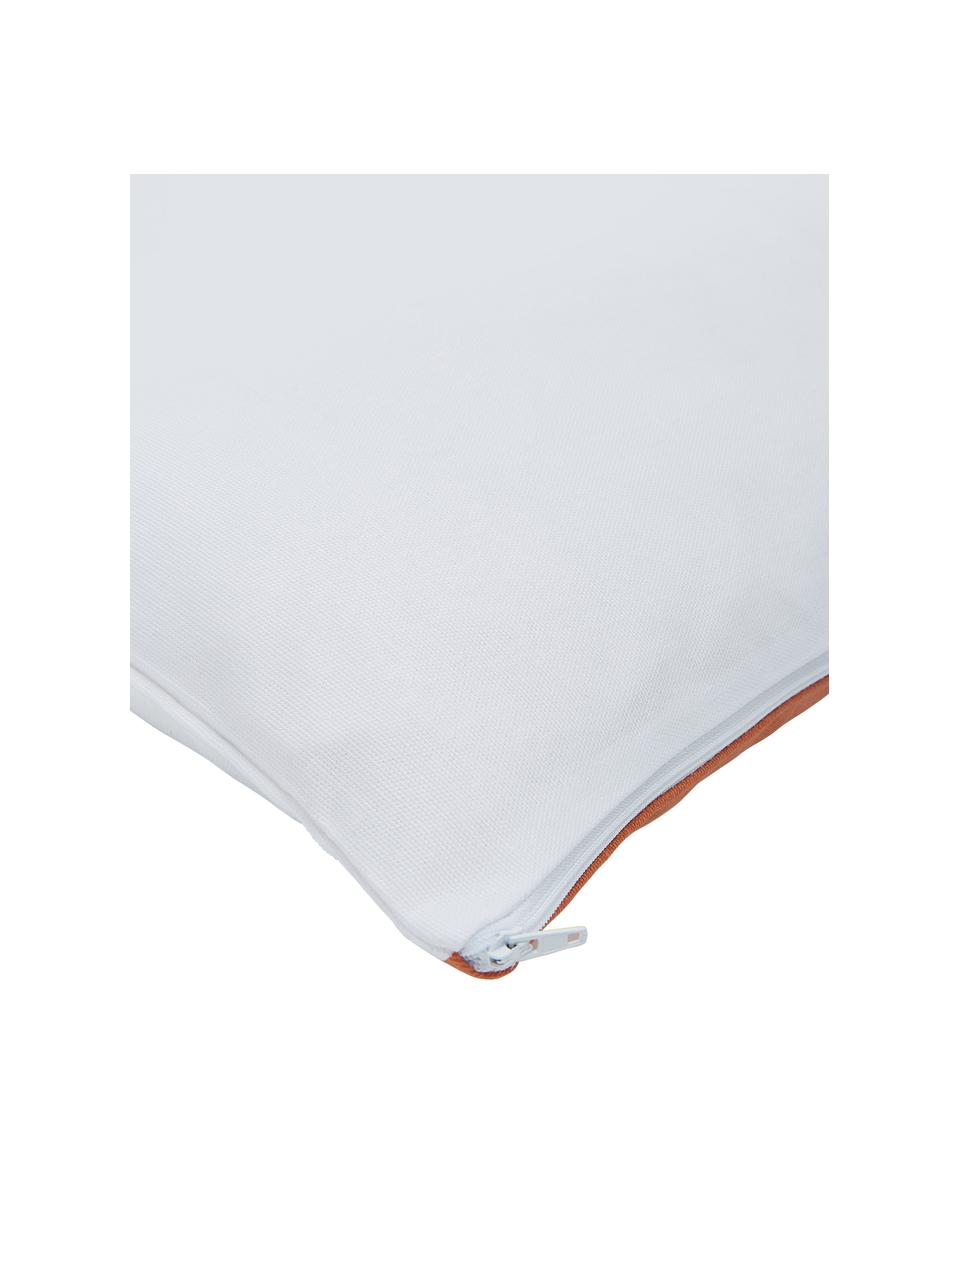 Federa arredo a strisce color arancione/bianco Ren, 100% cotone, Bianco, arancione, Larg. 30 x Lung. 50 cm